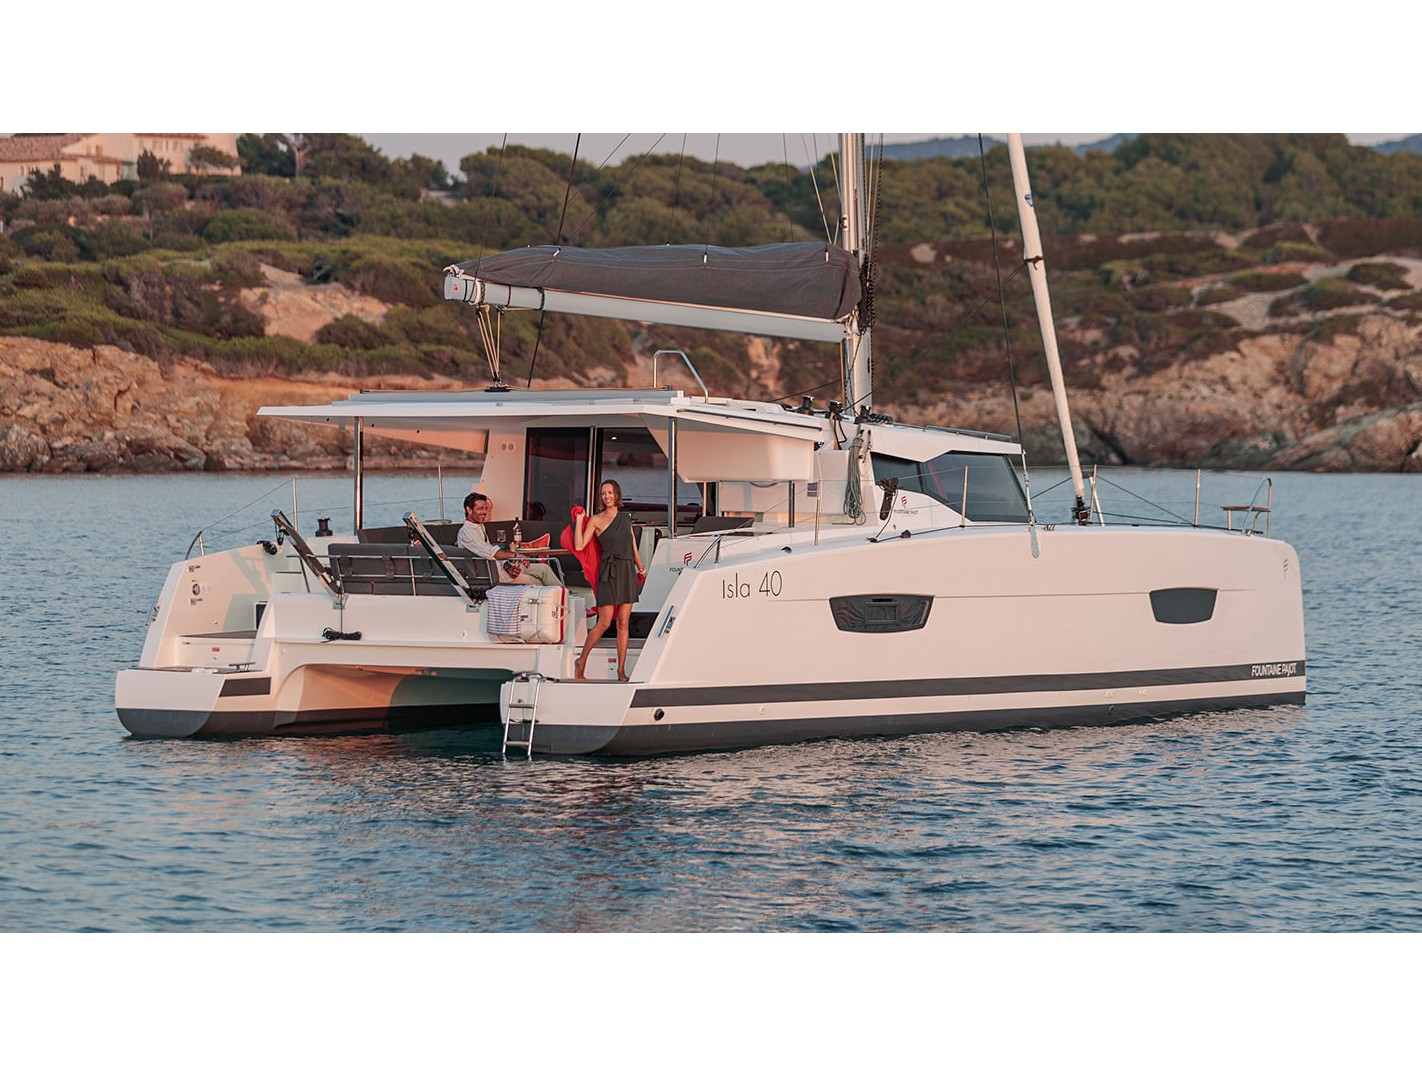 Isla 40 - Yacht Charter Can Pastilla & Boat hire in Spain Balearic Islands Mallorca Palma De Mallorca Can Pastilla Club Maritimo San Antonio De La Playa 1